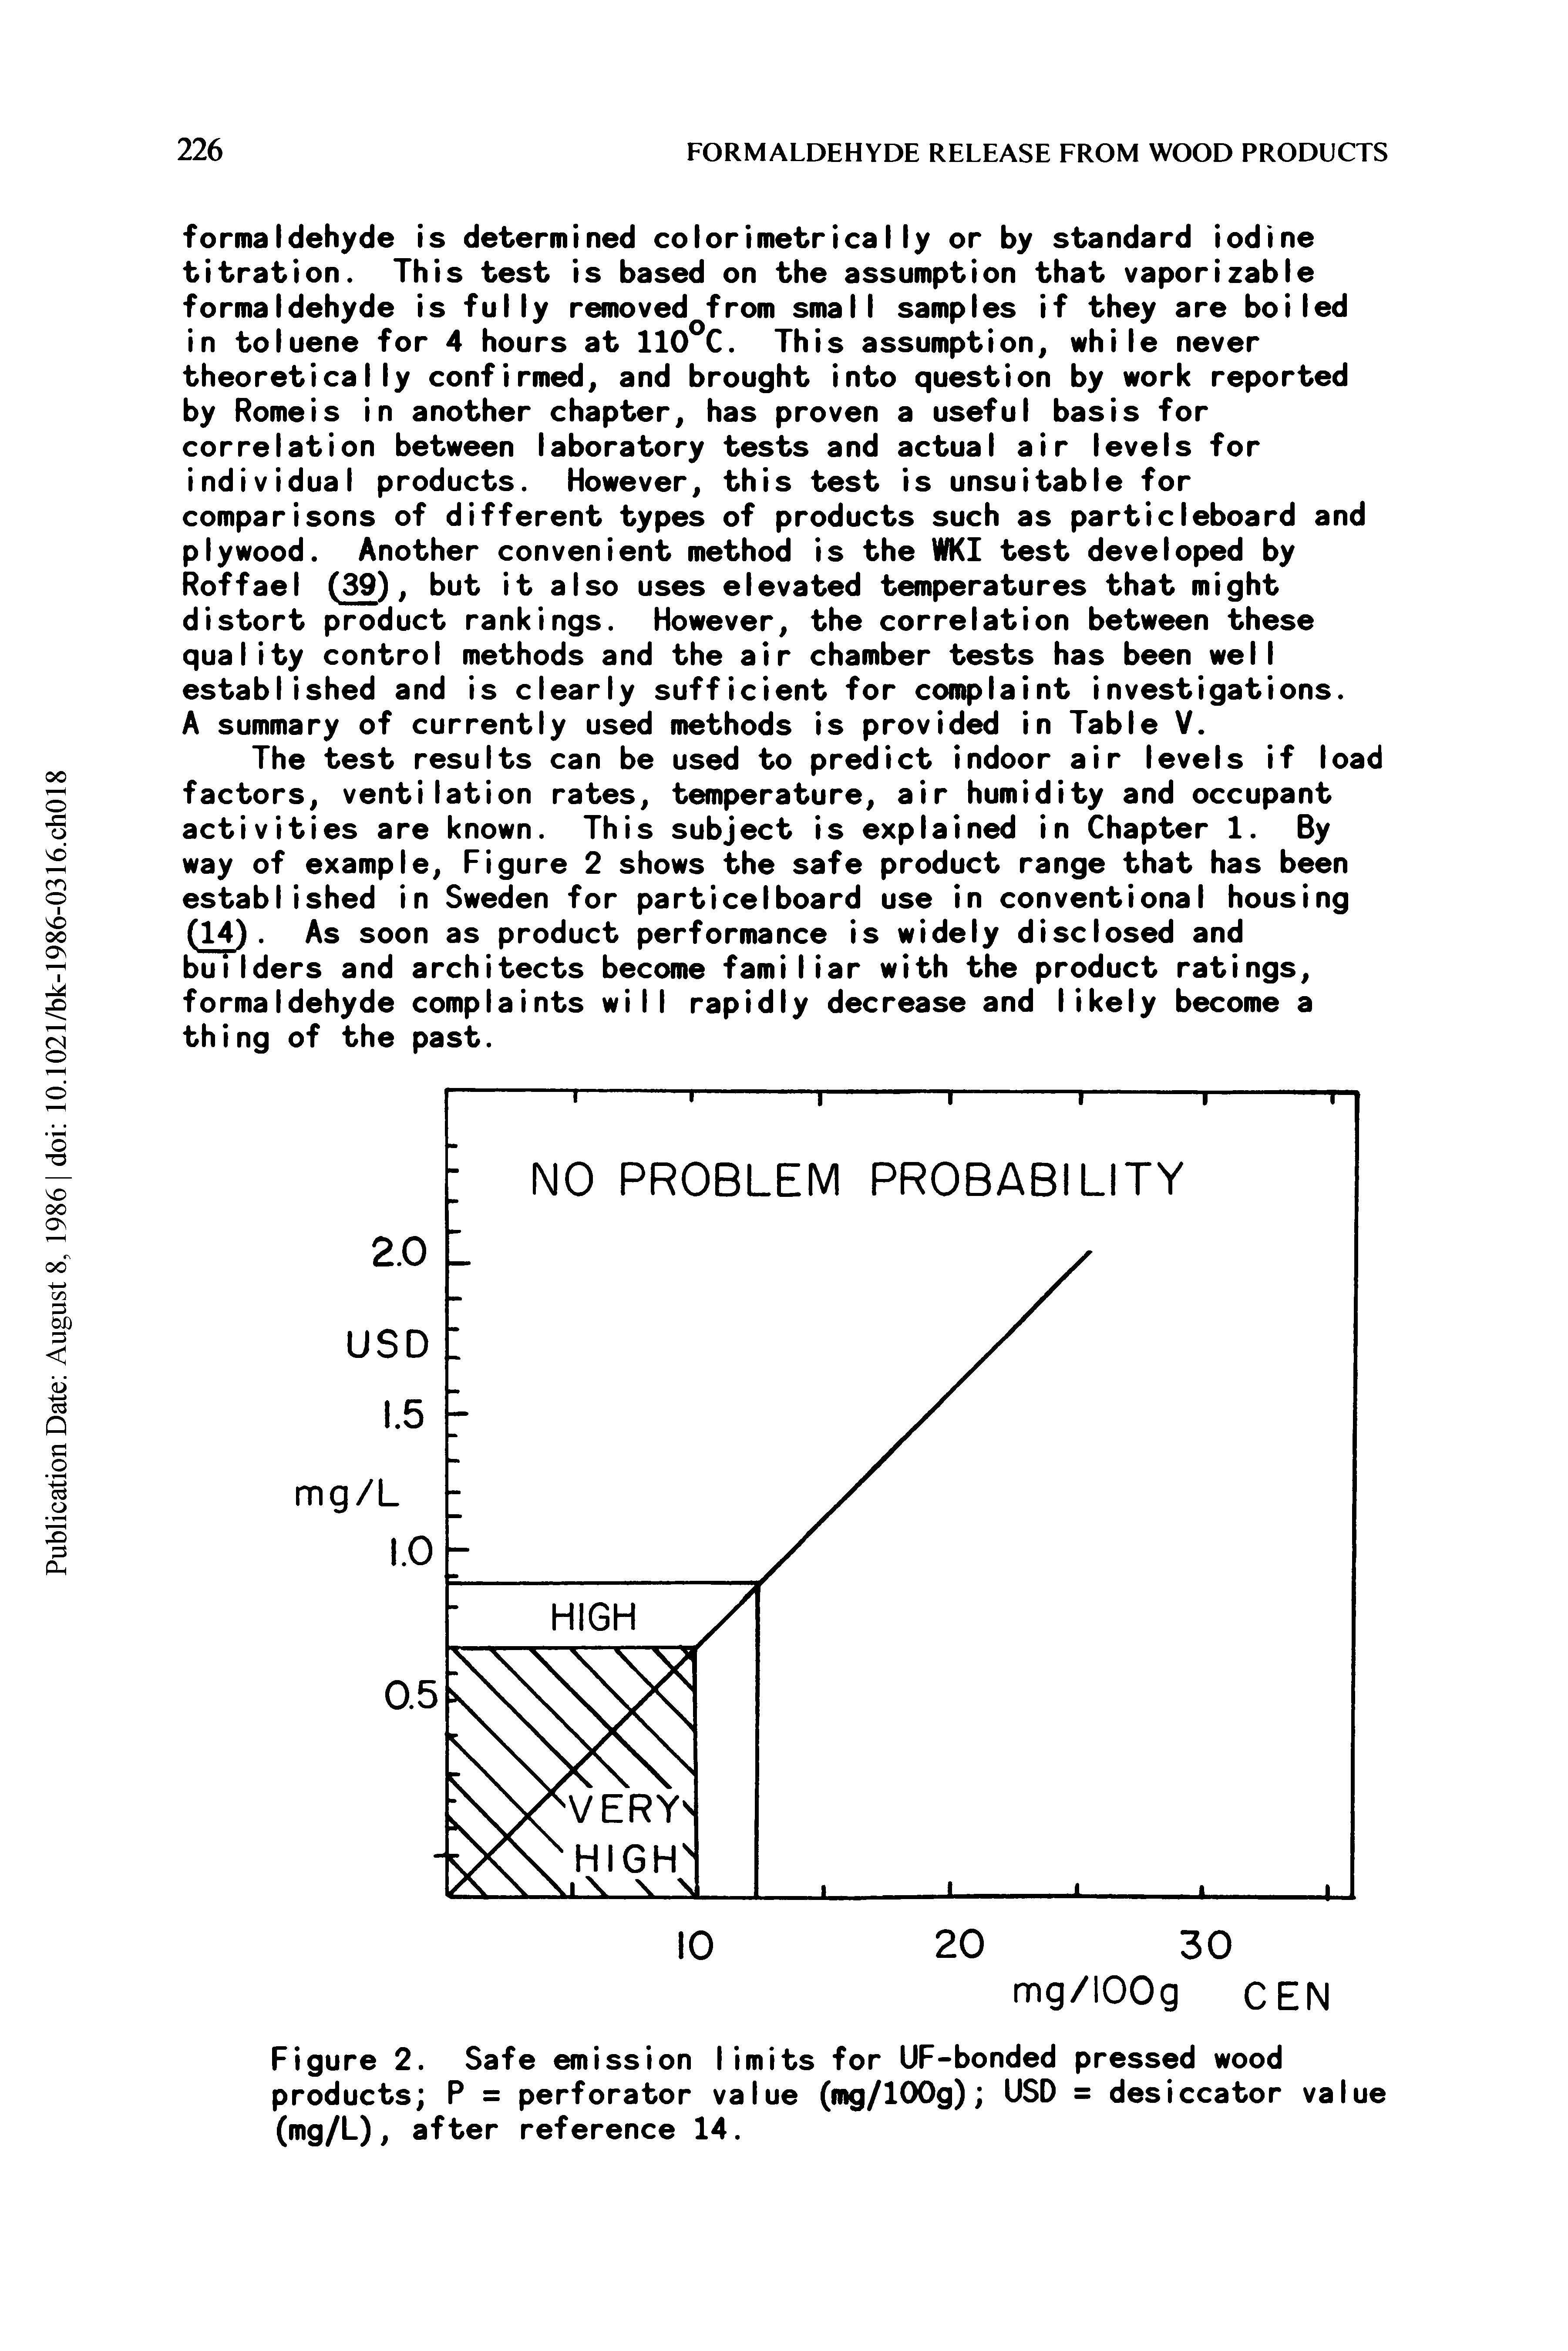 Figure 2. Safe emission limits for UF-bonded pressed wood products P = perforator value (mg/lOOg) USD = desiccator value (mg/L), after reference 14.